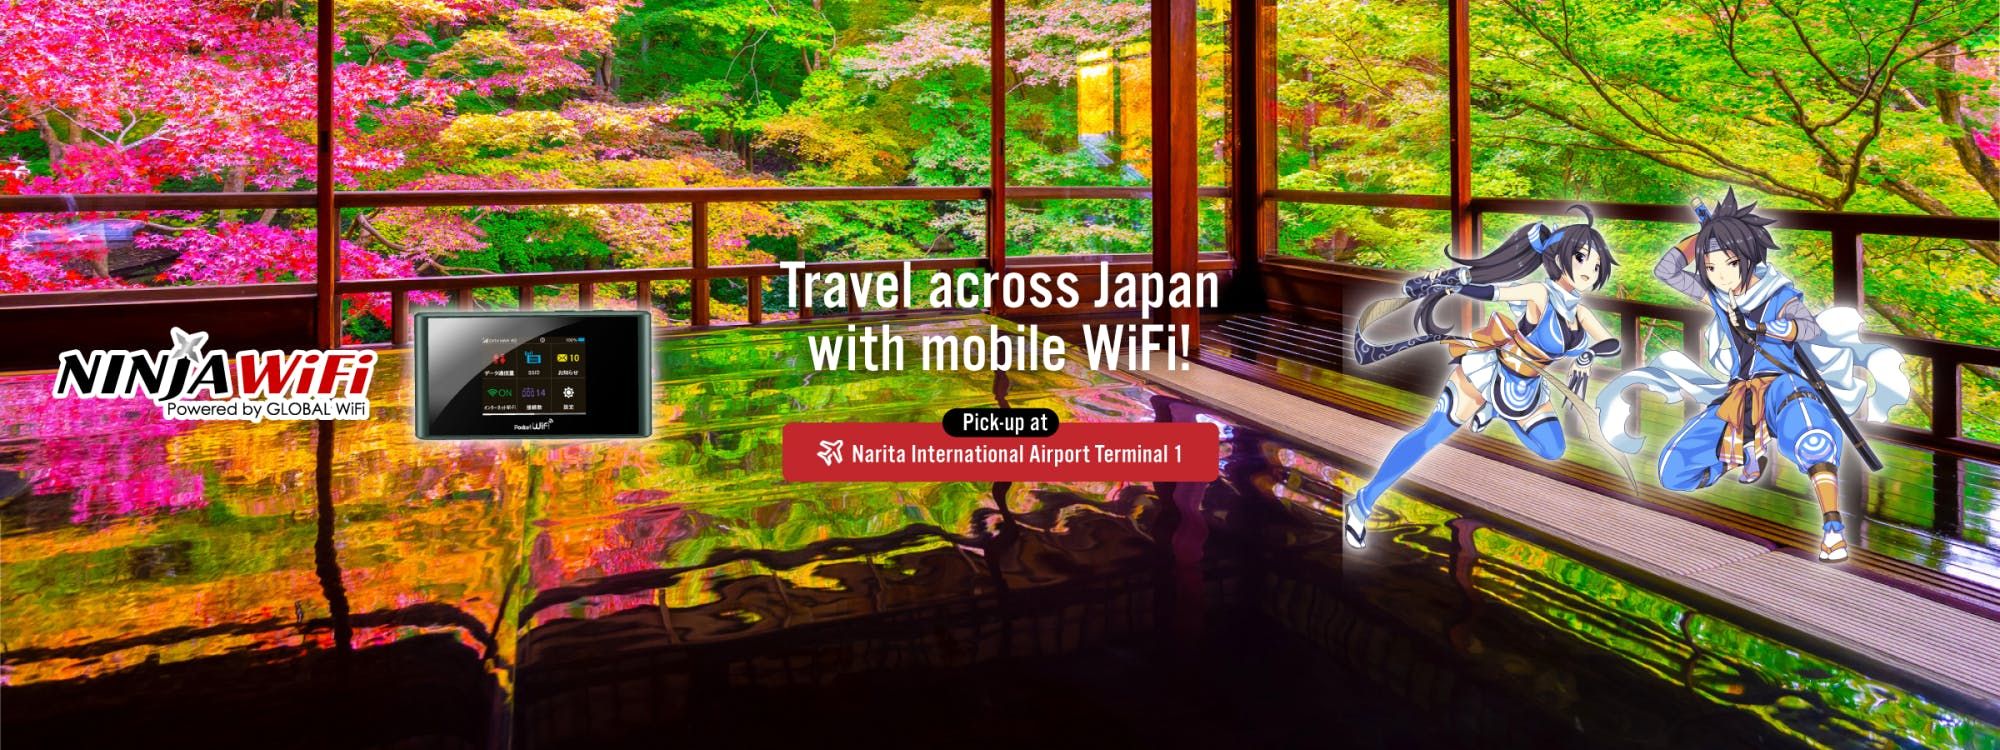 Imagen del tour: Pocket Wi-Fi 4G LTE router rental at Narita Airport Terminal 1